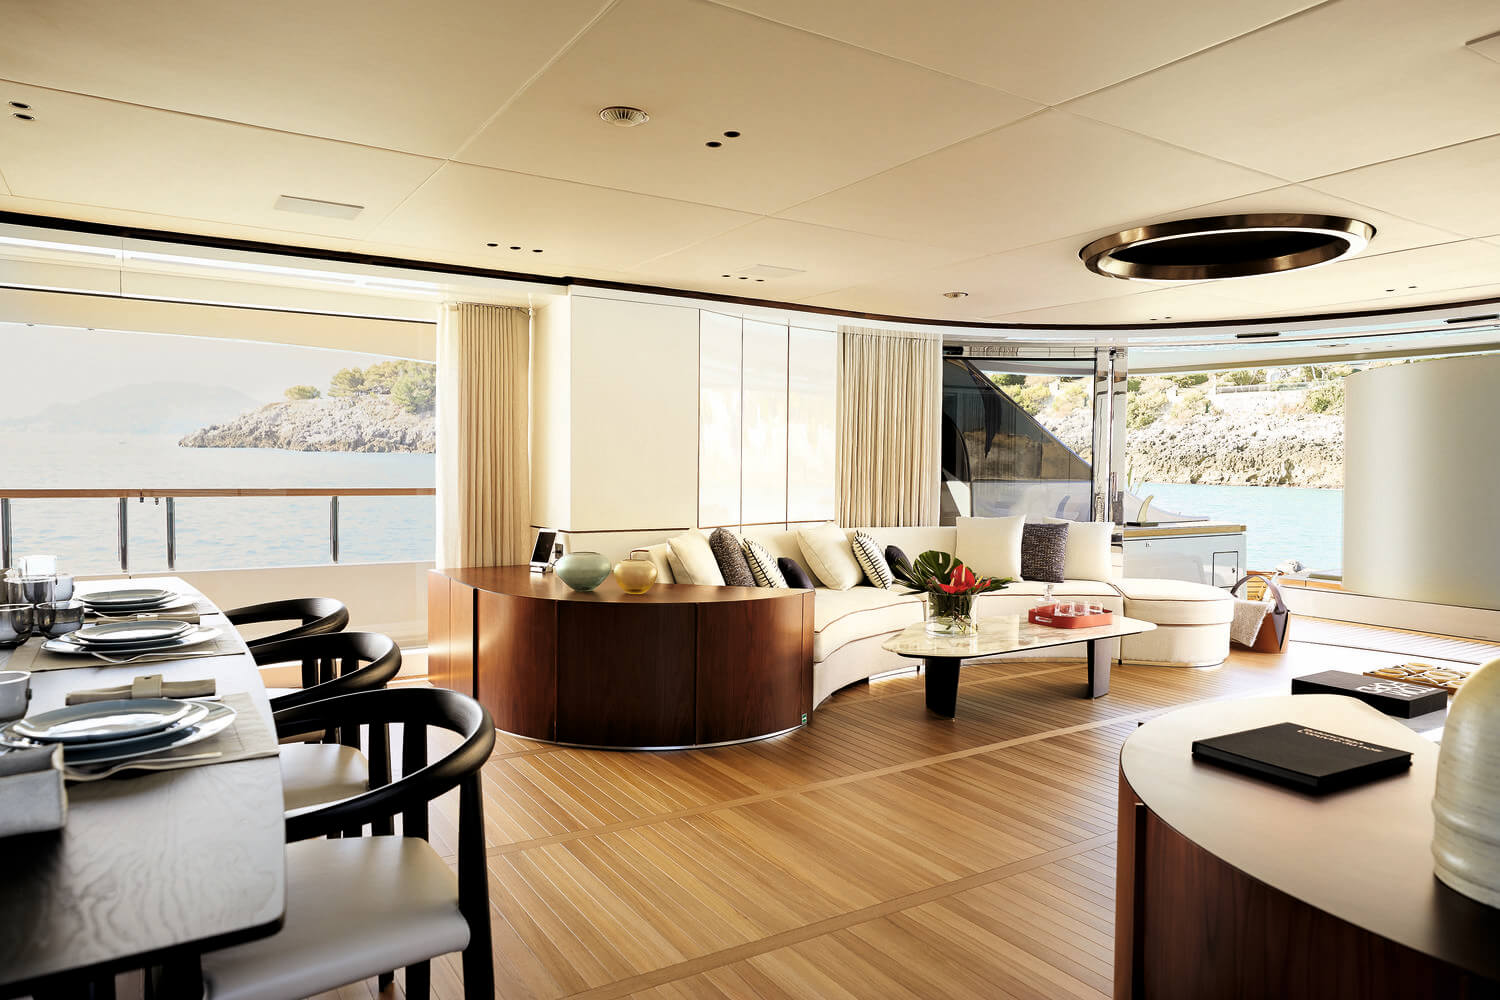 Luxury Penthouse on-board Benetti yacht